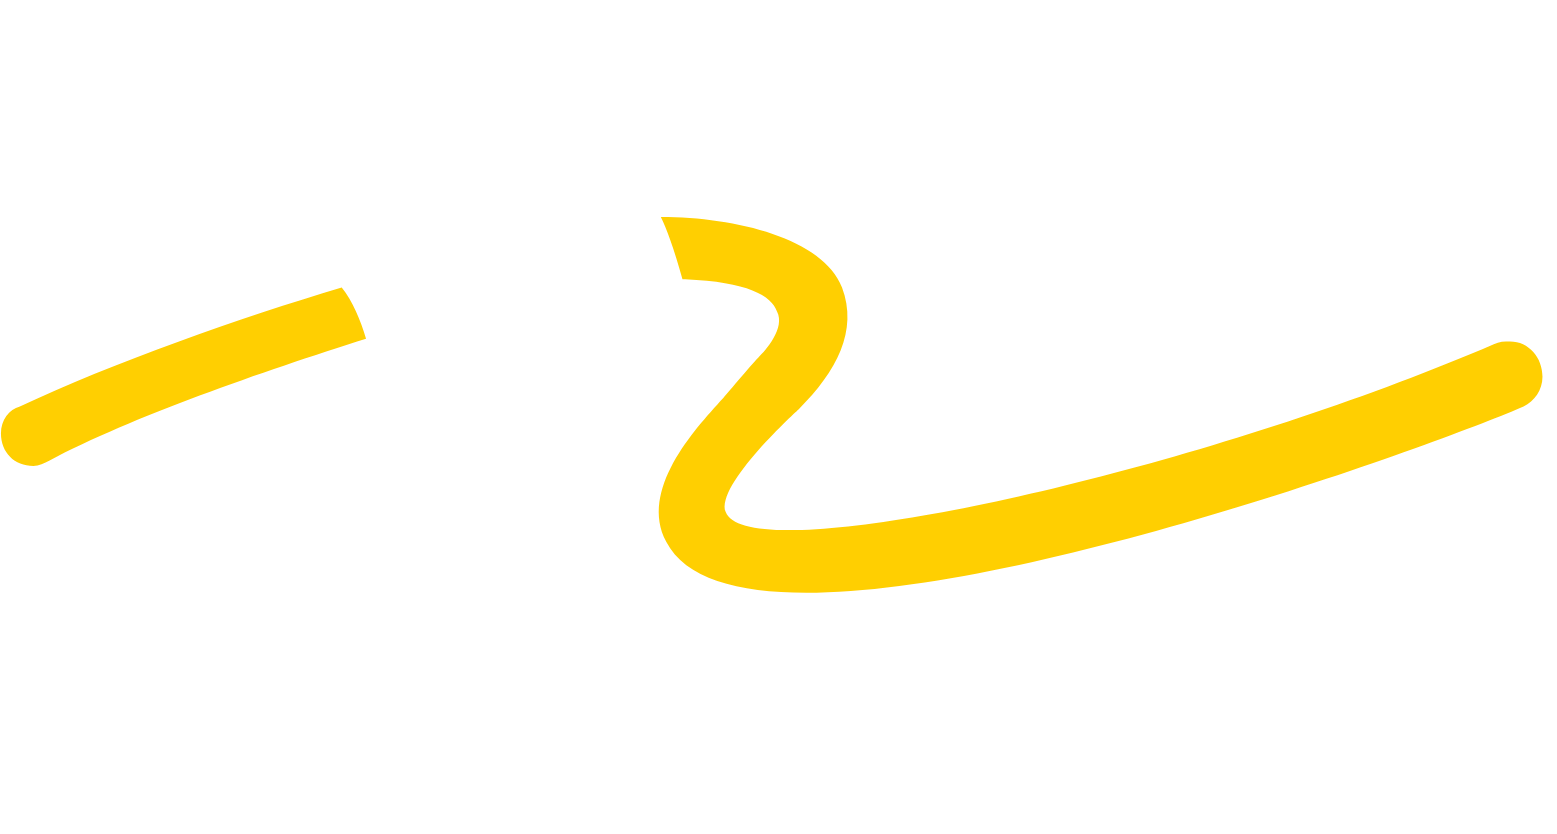 Valero Energy logo for dark backgrounds (transparent PNG)